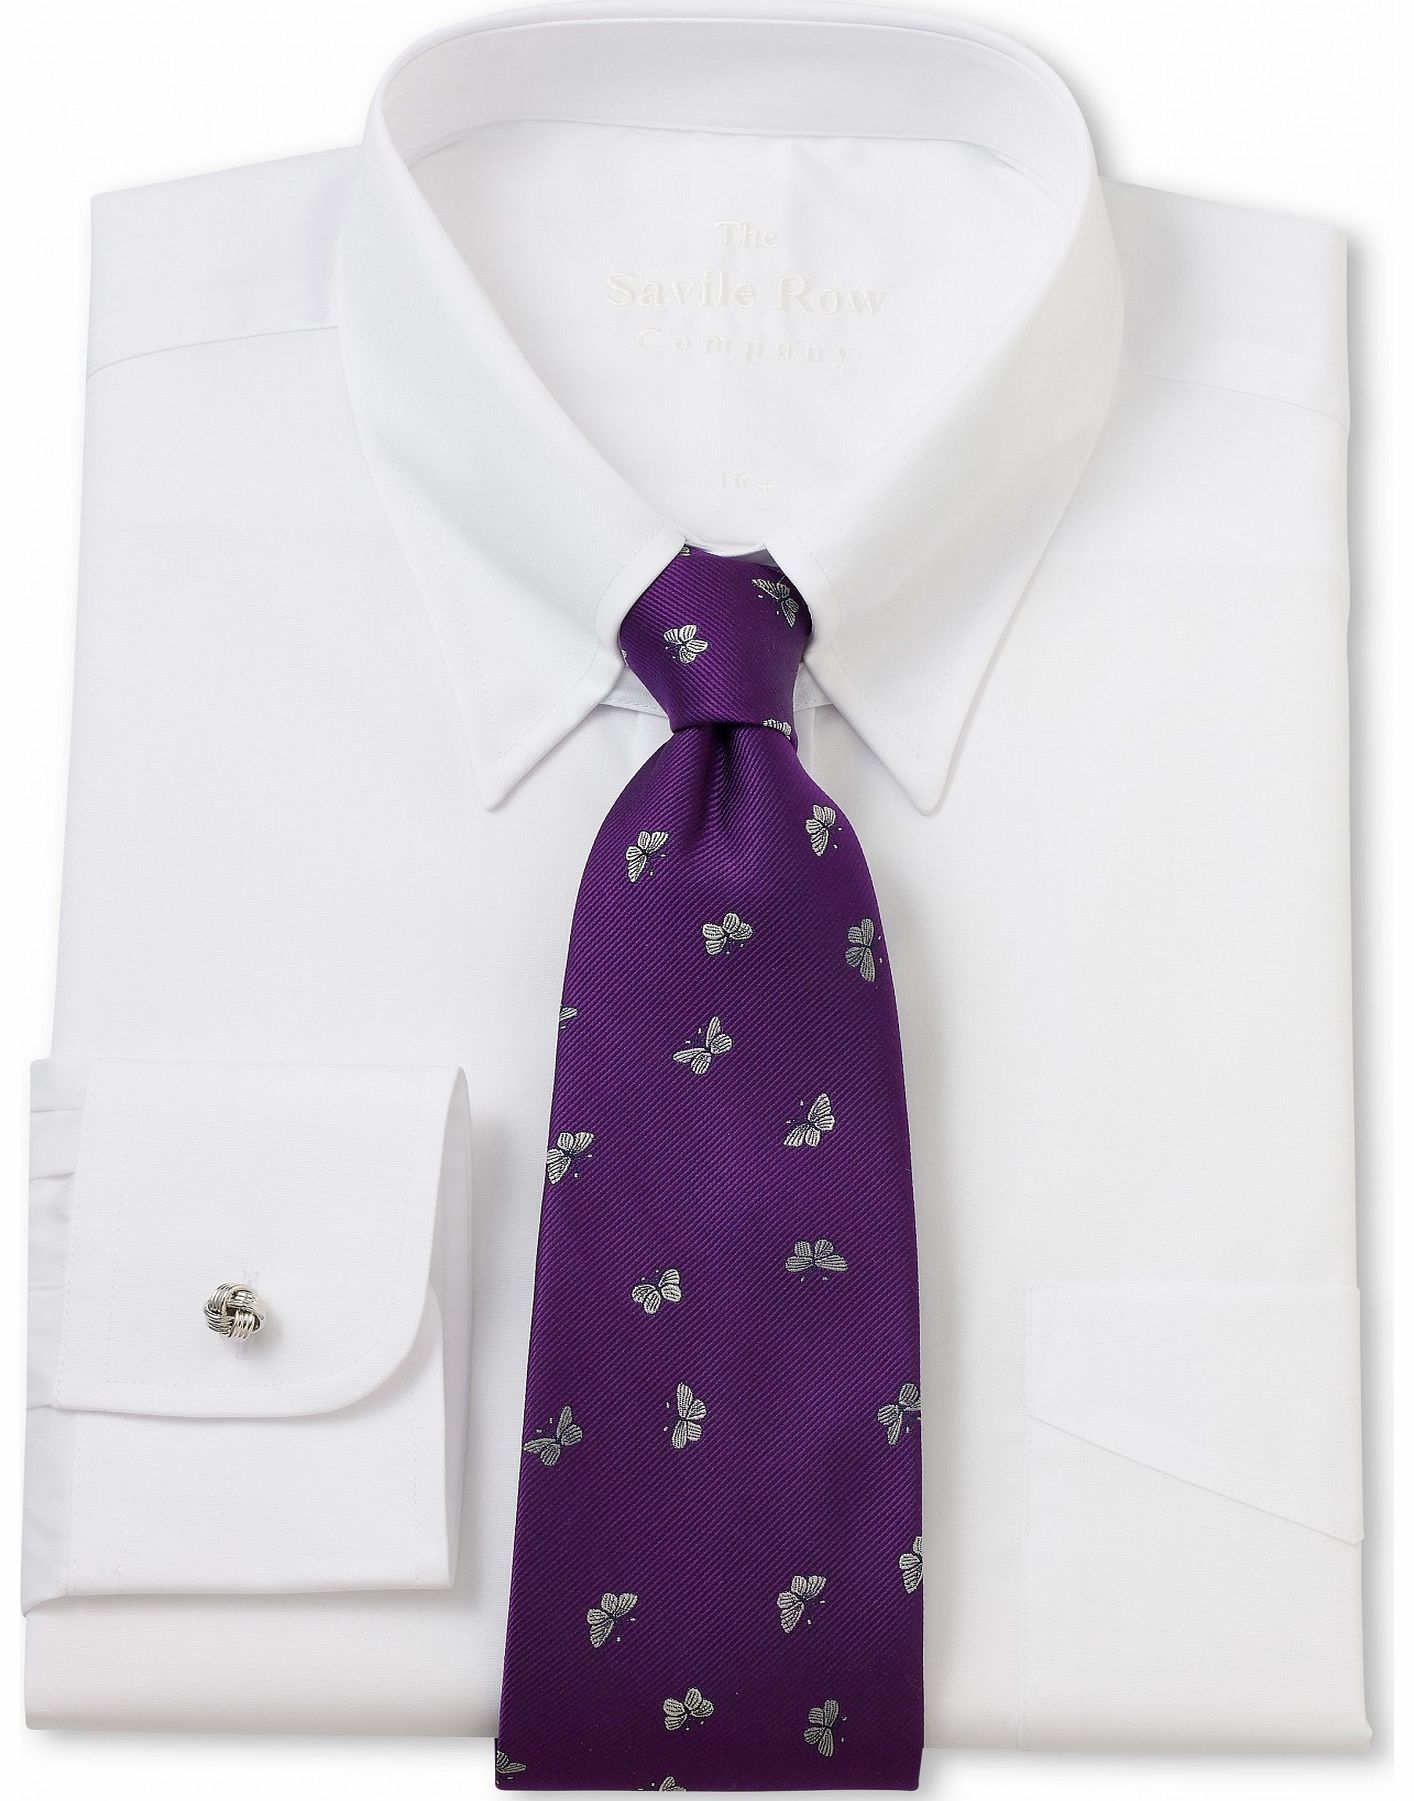 Savile Row Company White Poplin Tab Collar Classic Fit Shirt 18``